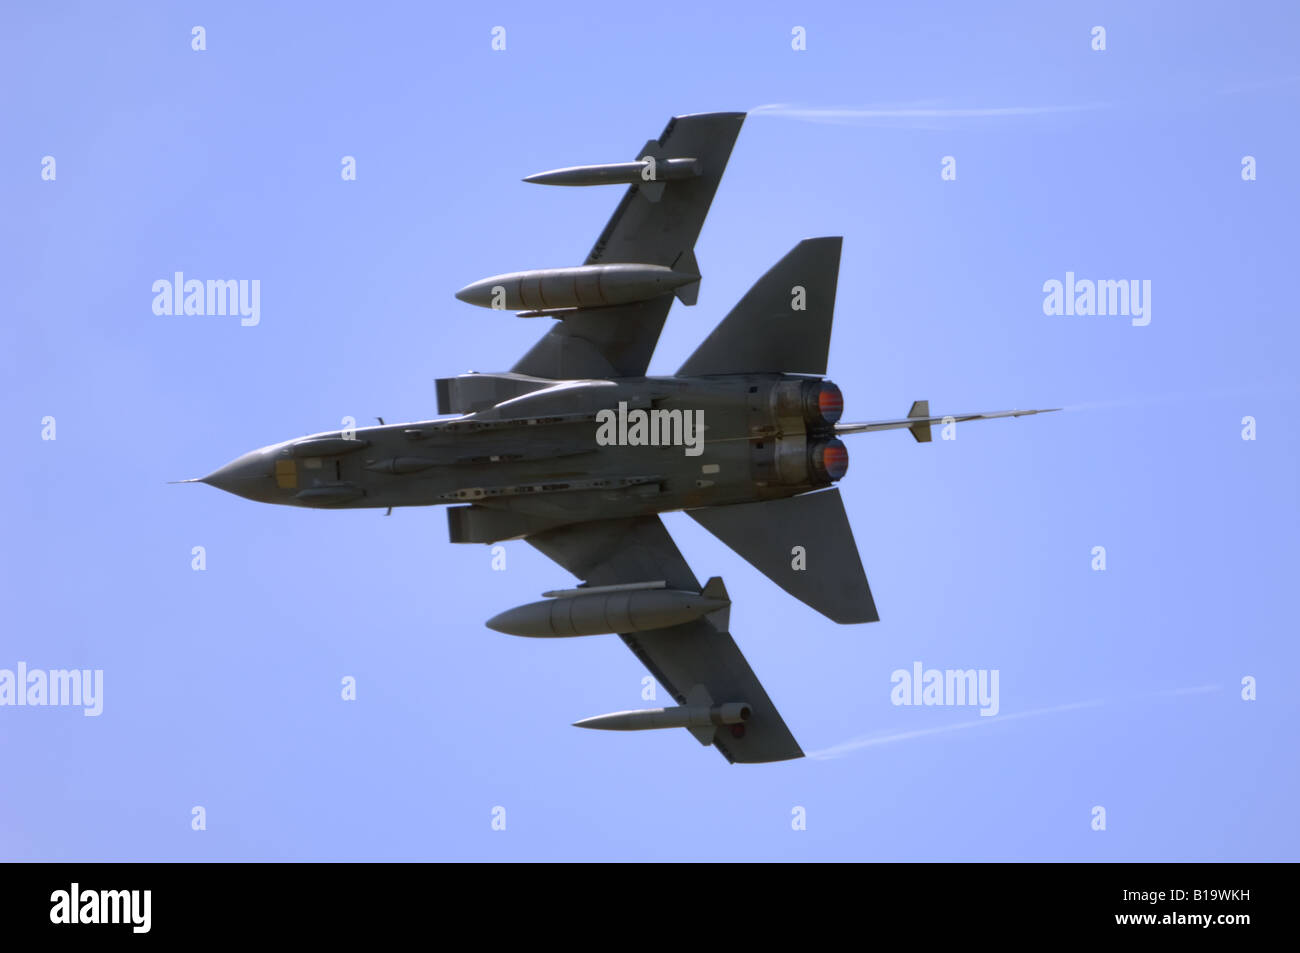 An RAF Panavia Tornado flying in the sky. Stock Photo